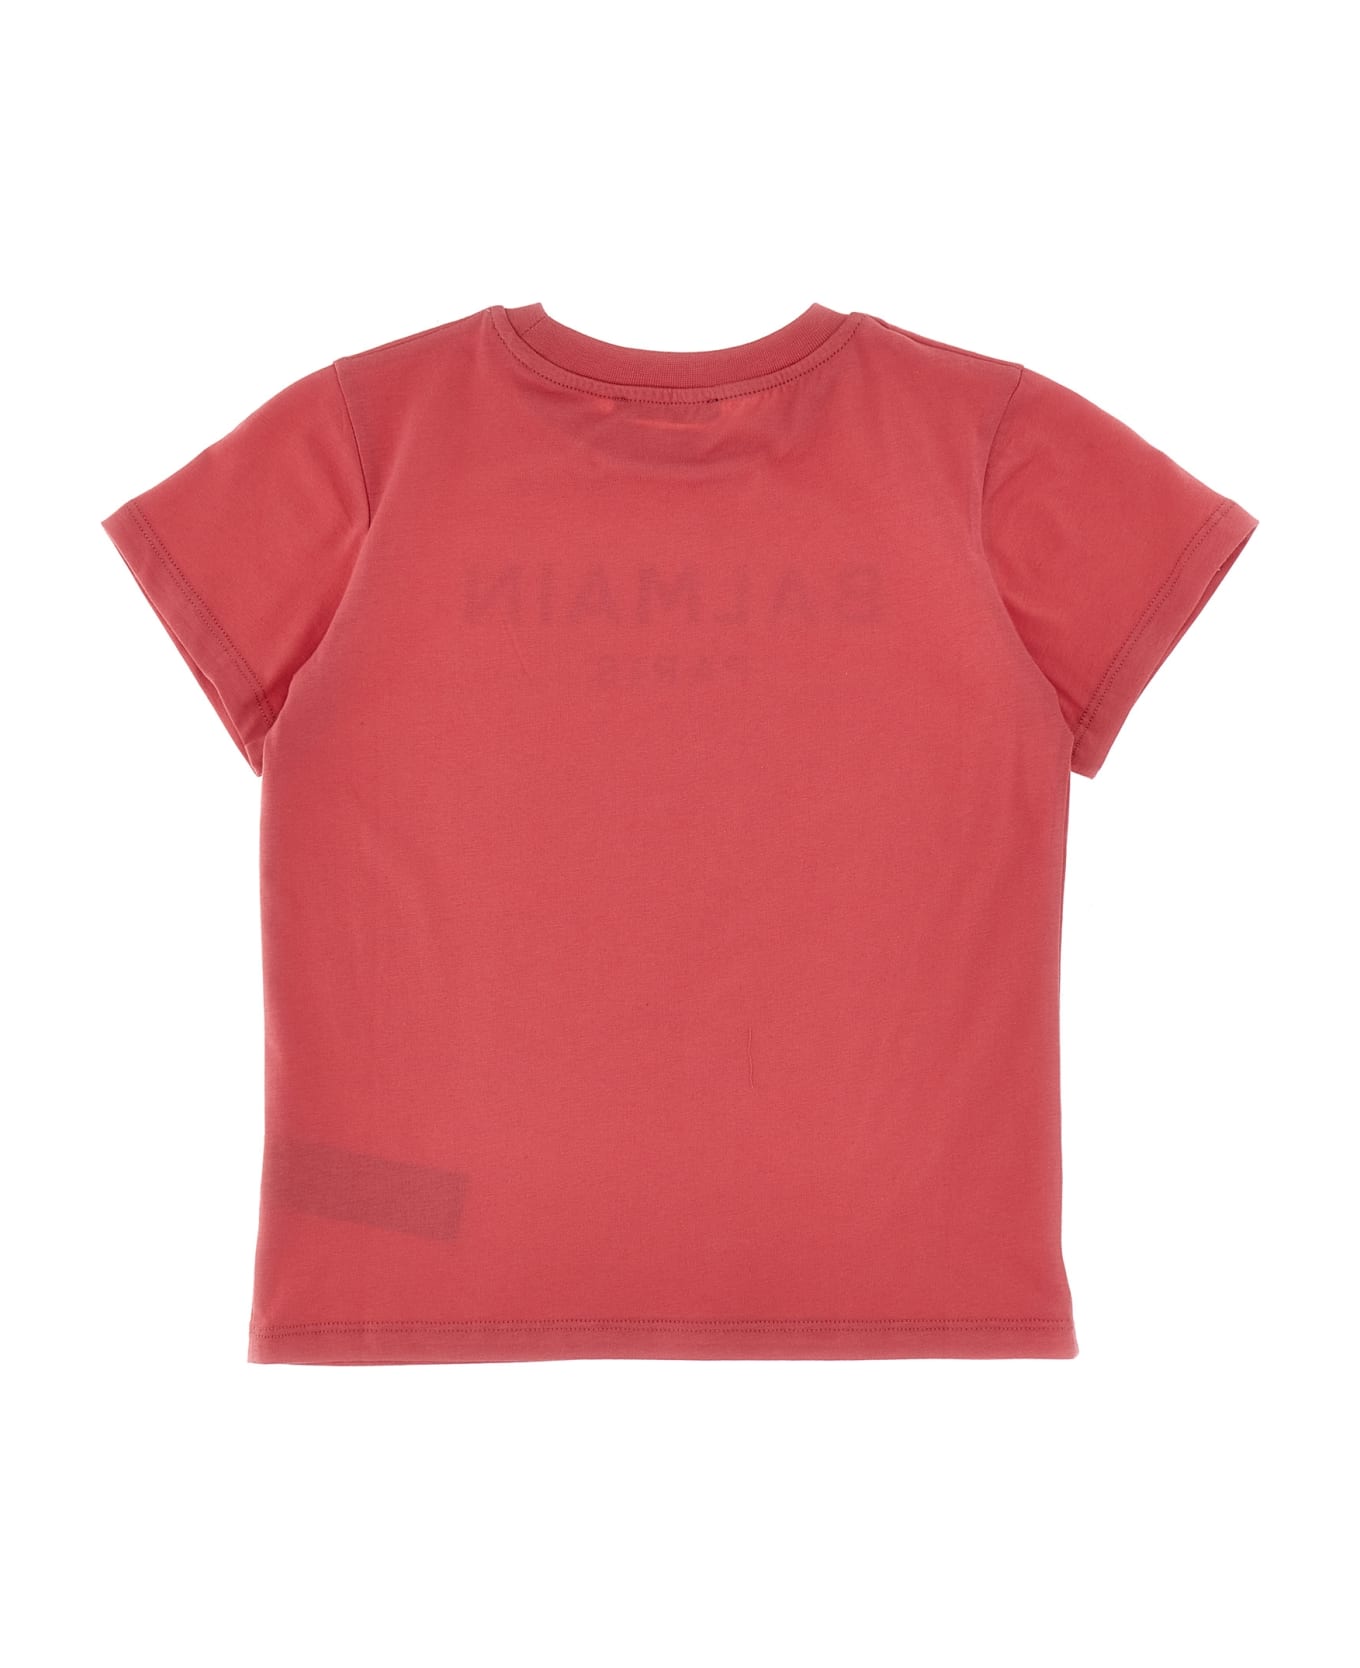 Balmain Logo Print T-shirt - Pink Tシャツ＆ポロシャツ